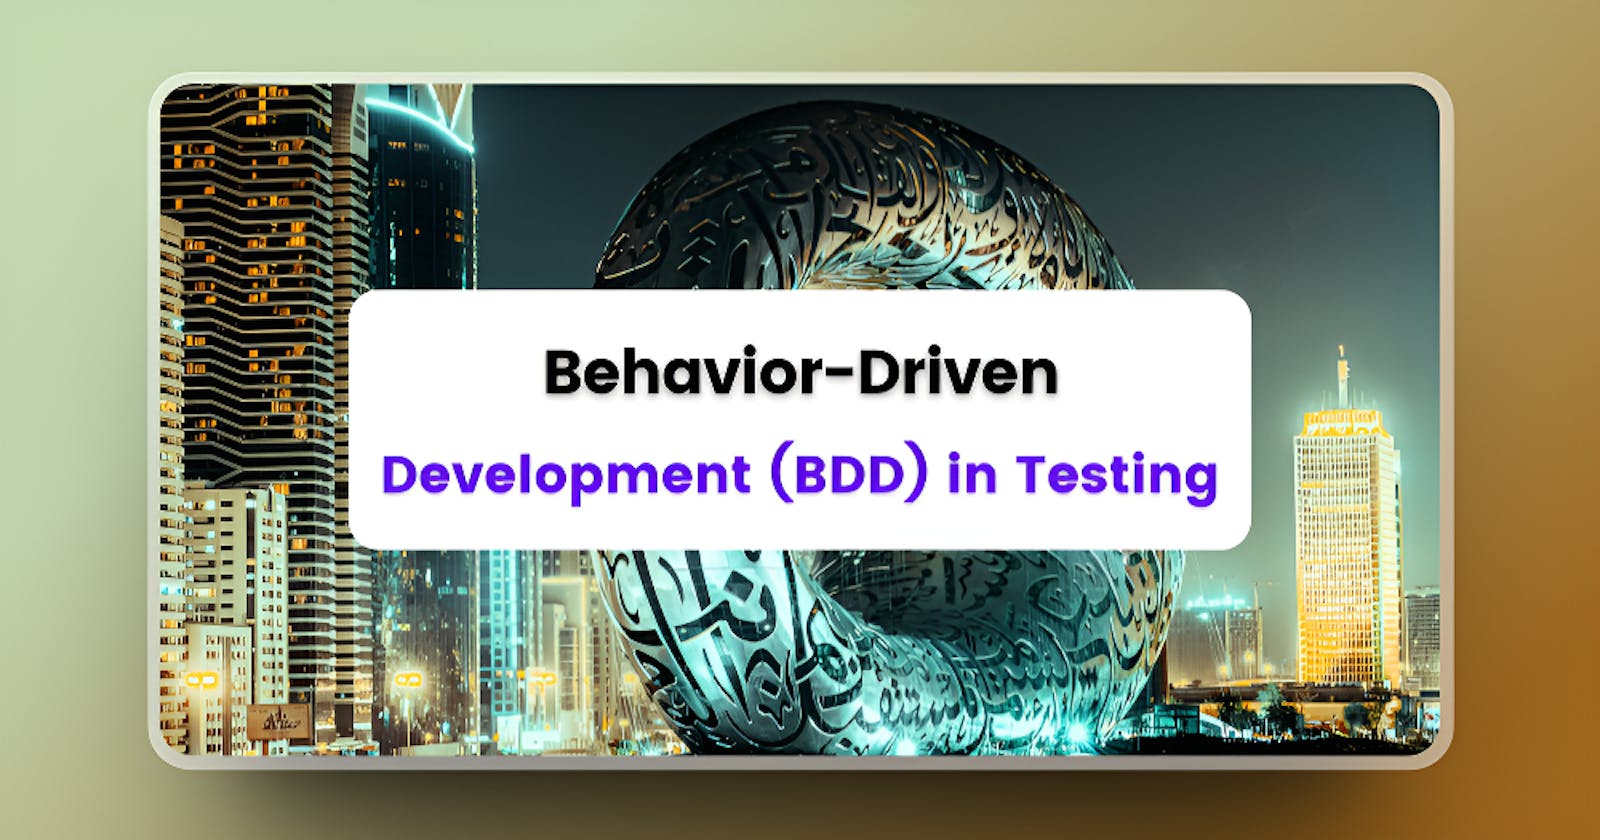 Overview of Behavior-Driven Development (BDD) in Testing